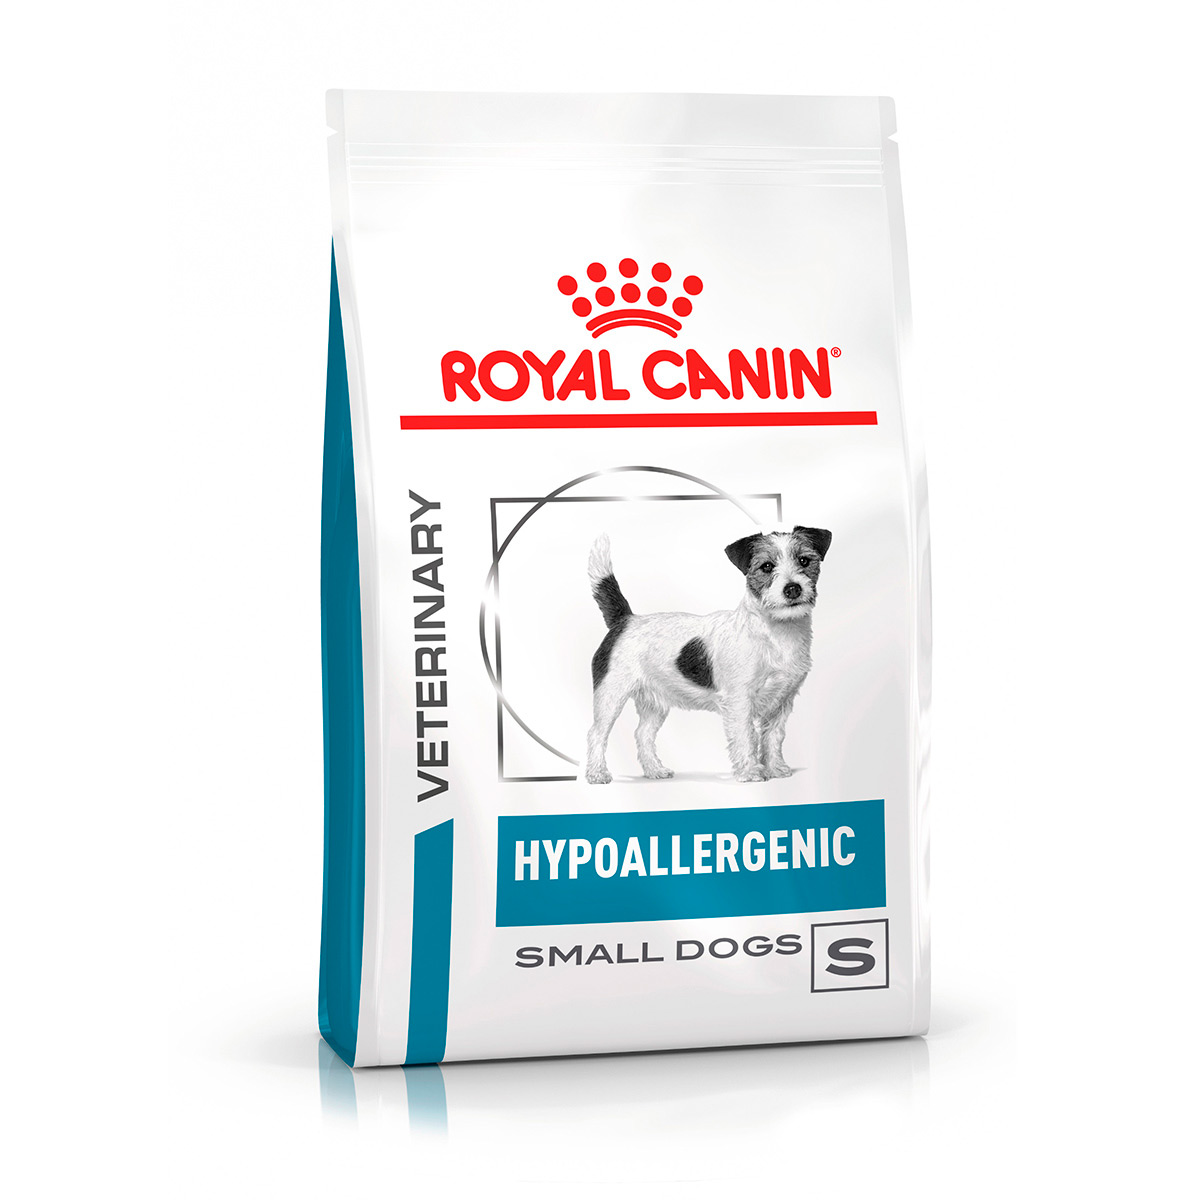 ROYAL CANIN® Veterinary HYPOALLERGENIC SMALL DOGS Trockenfutter für Hunde